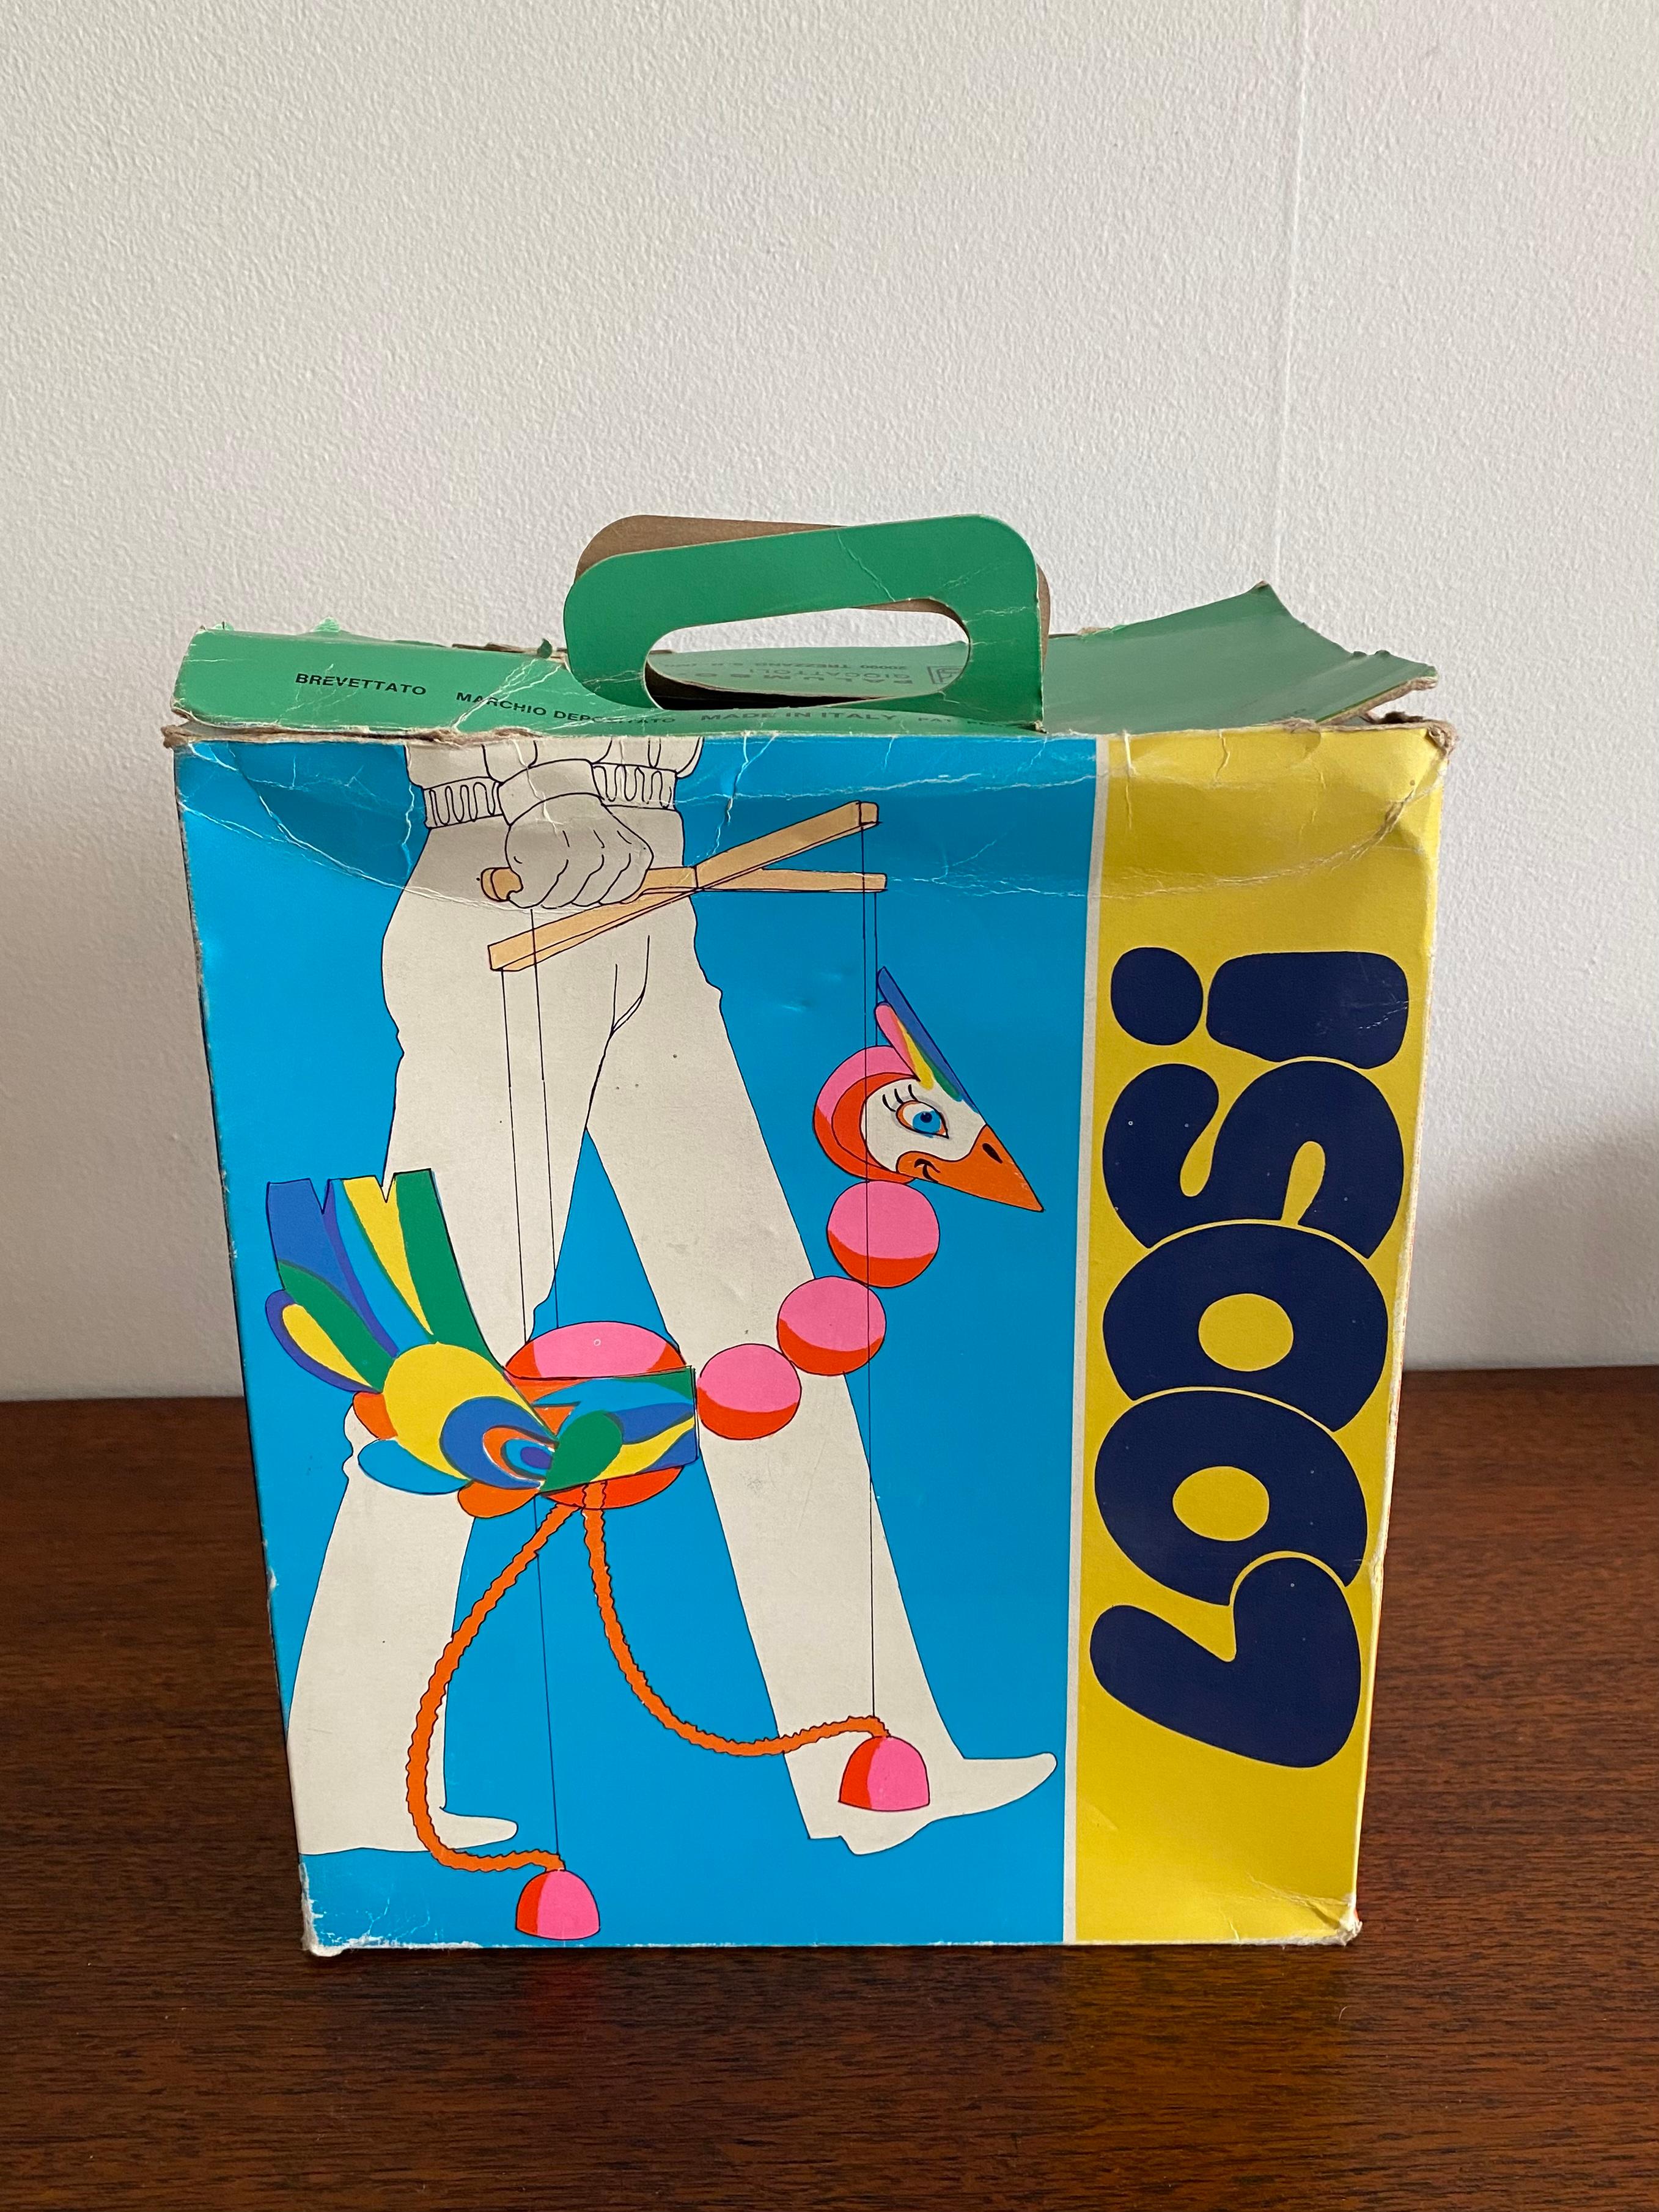 Loosi Goosi Marionette Bird by Palumbo Giocattoli, 1970s For Sale 5